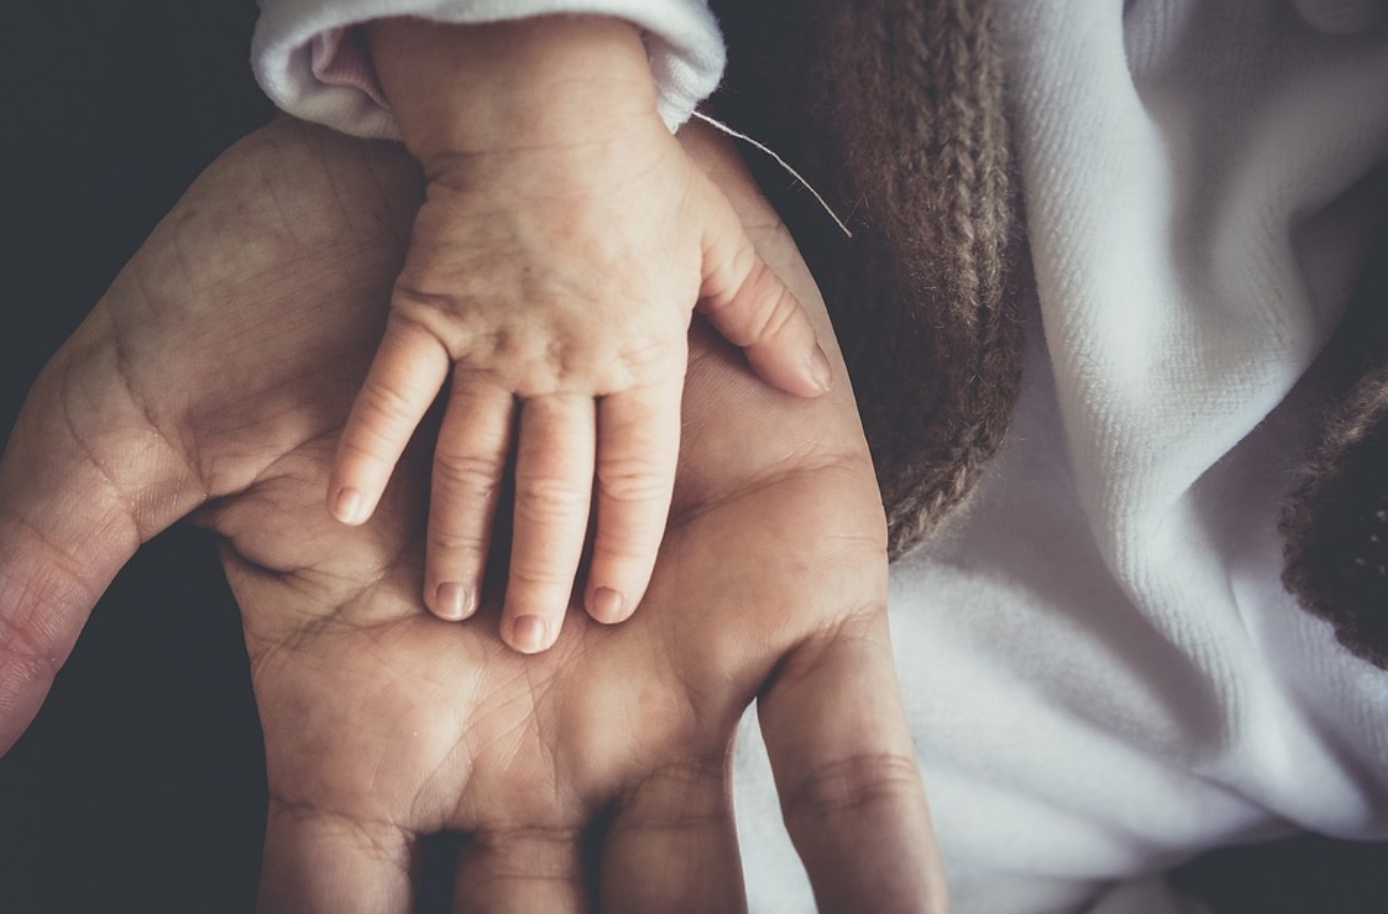 Baby's hand on man's hand; image by Skalekar1992, via Pixabay.com.